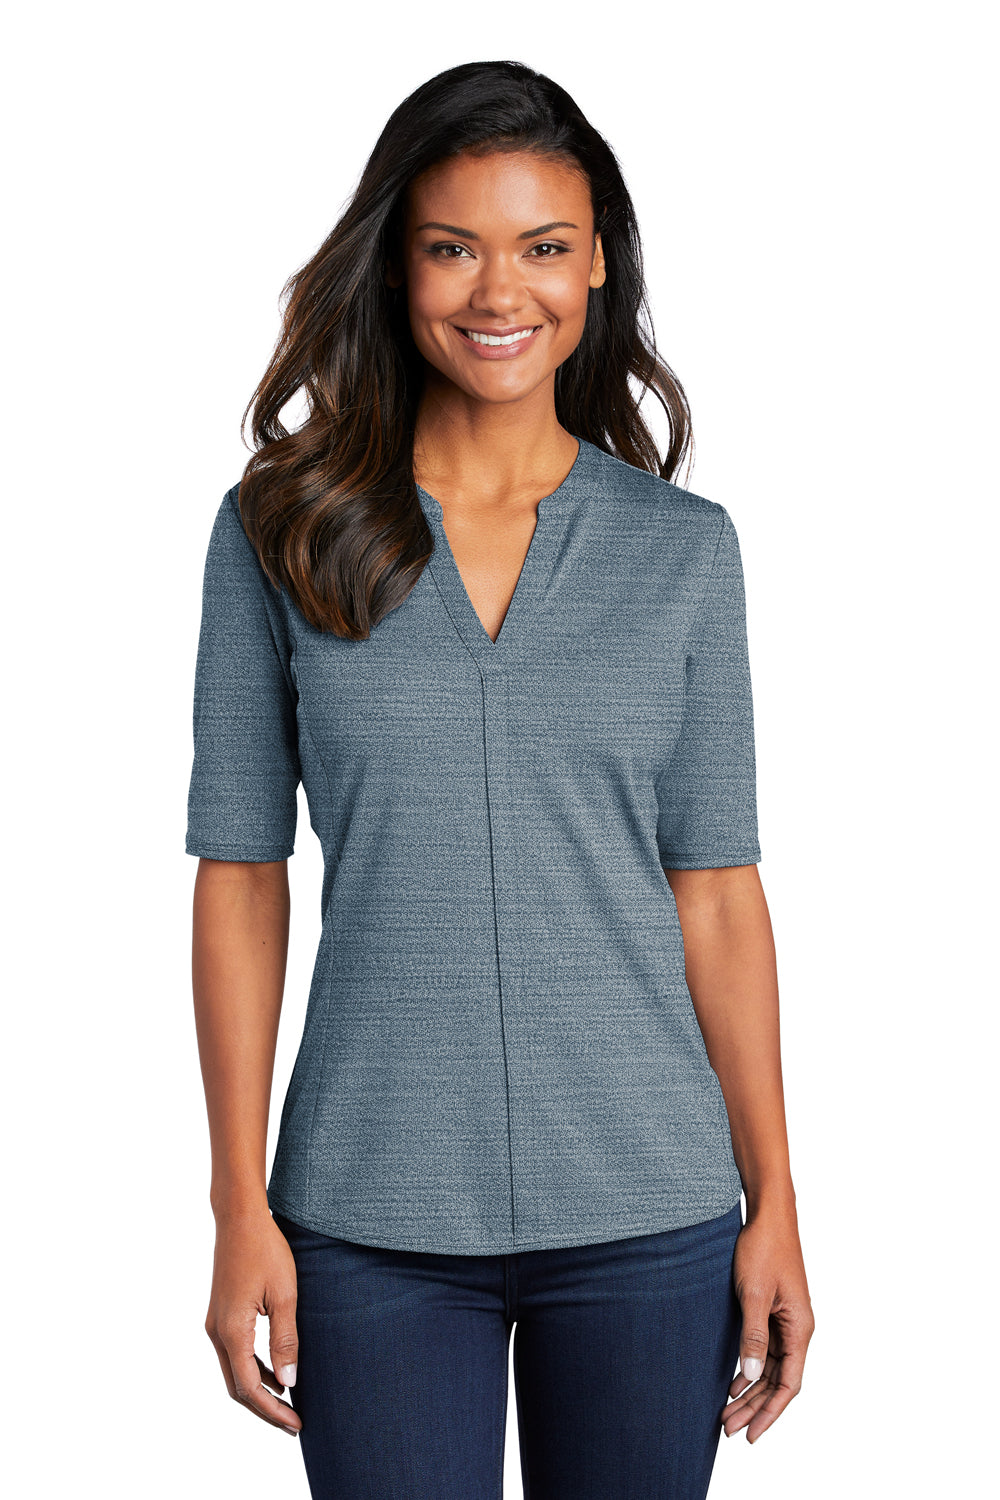 Port Authority Womens Stretch Short Sleeve Polo Shirt Regatta Blue/Gusty Grey Front